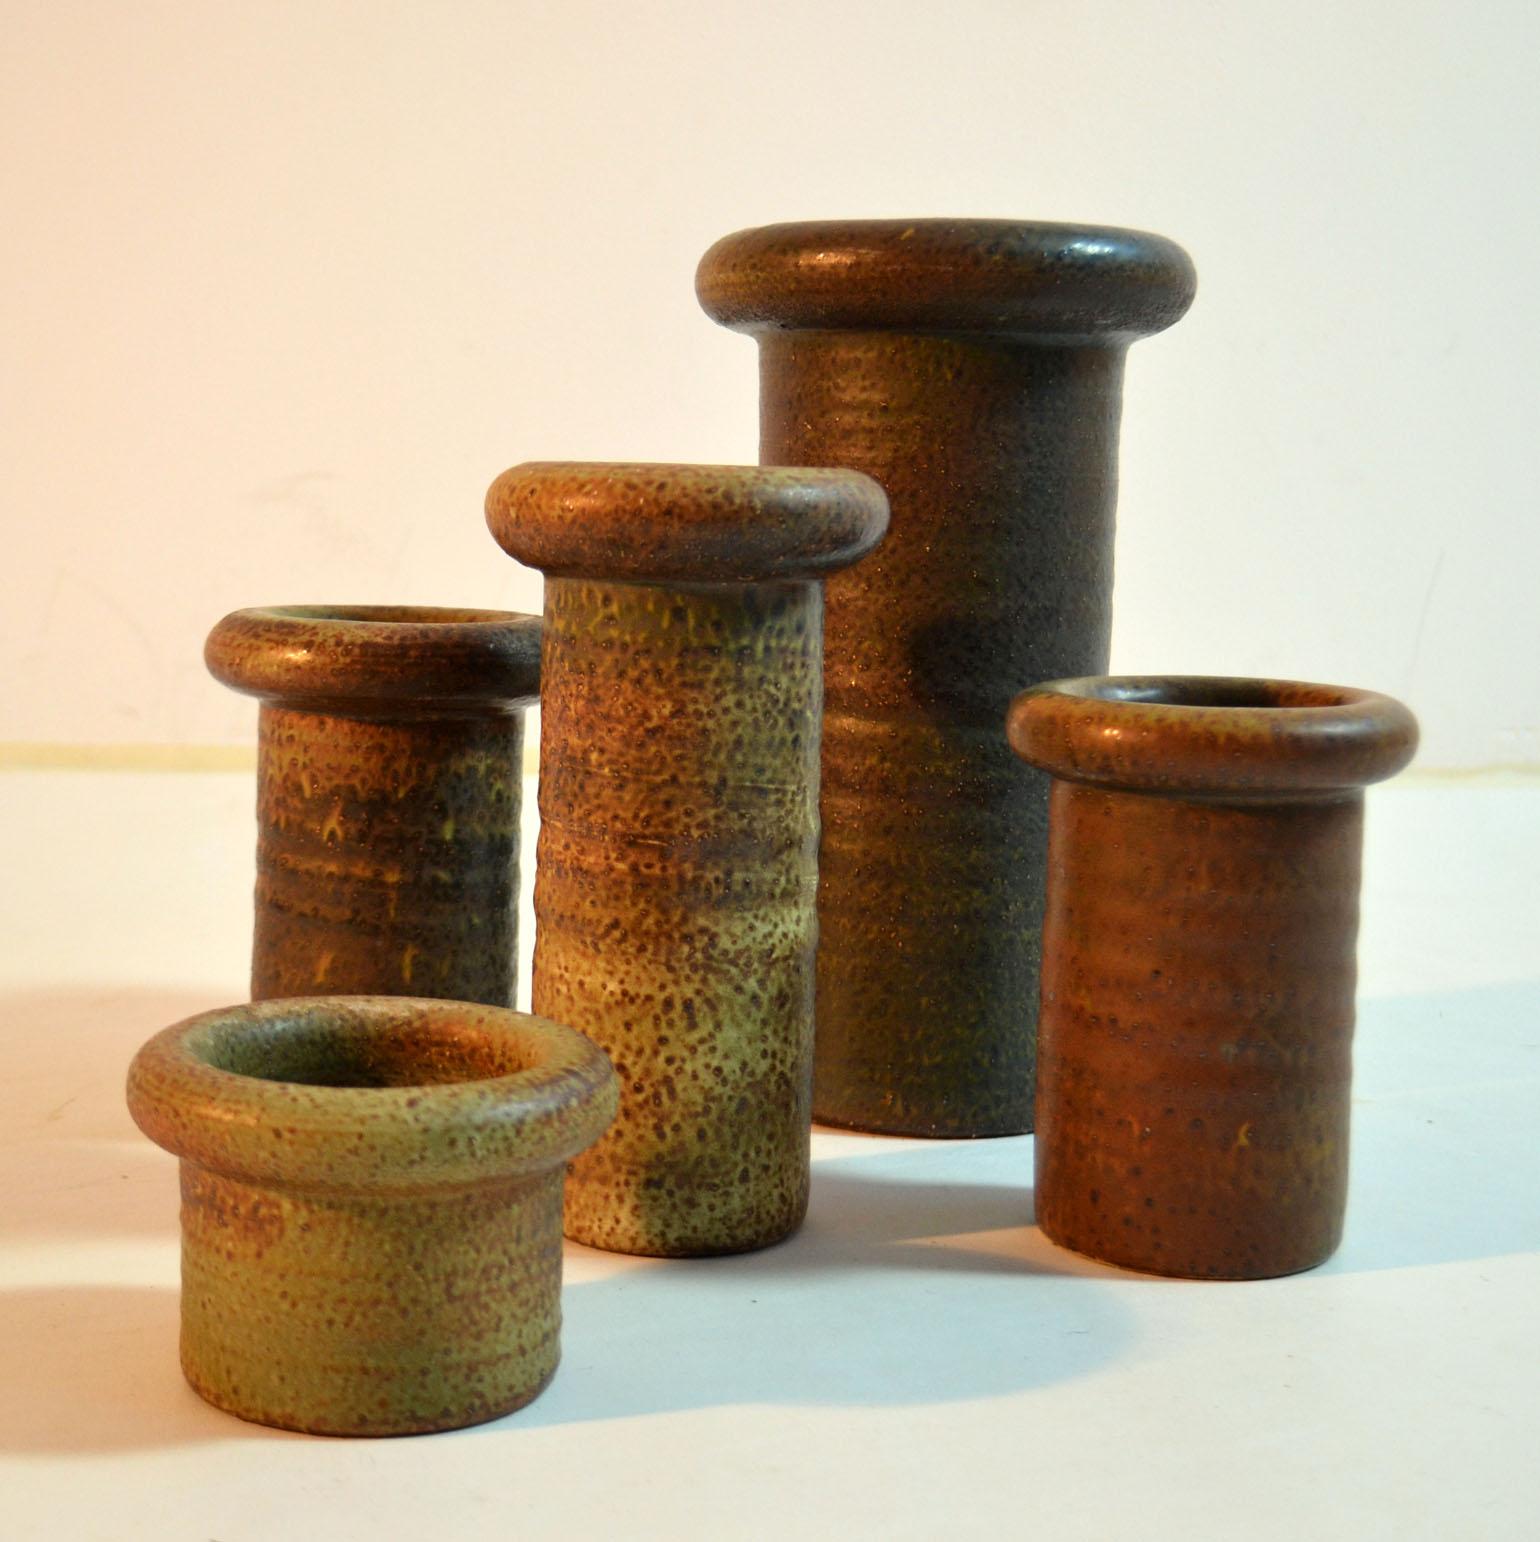 Glazed Group of Mid Century Ceramic Studio Vases in Earth Tones